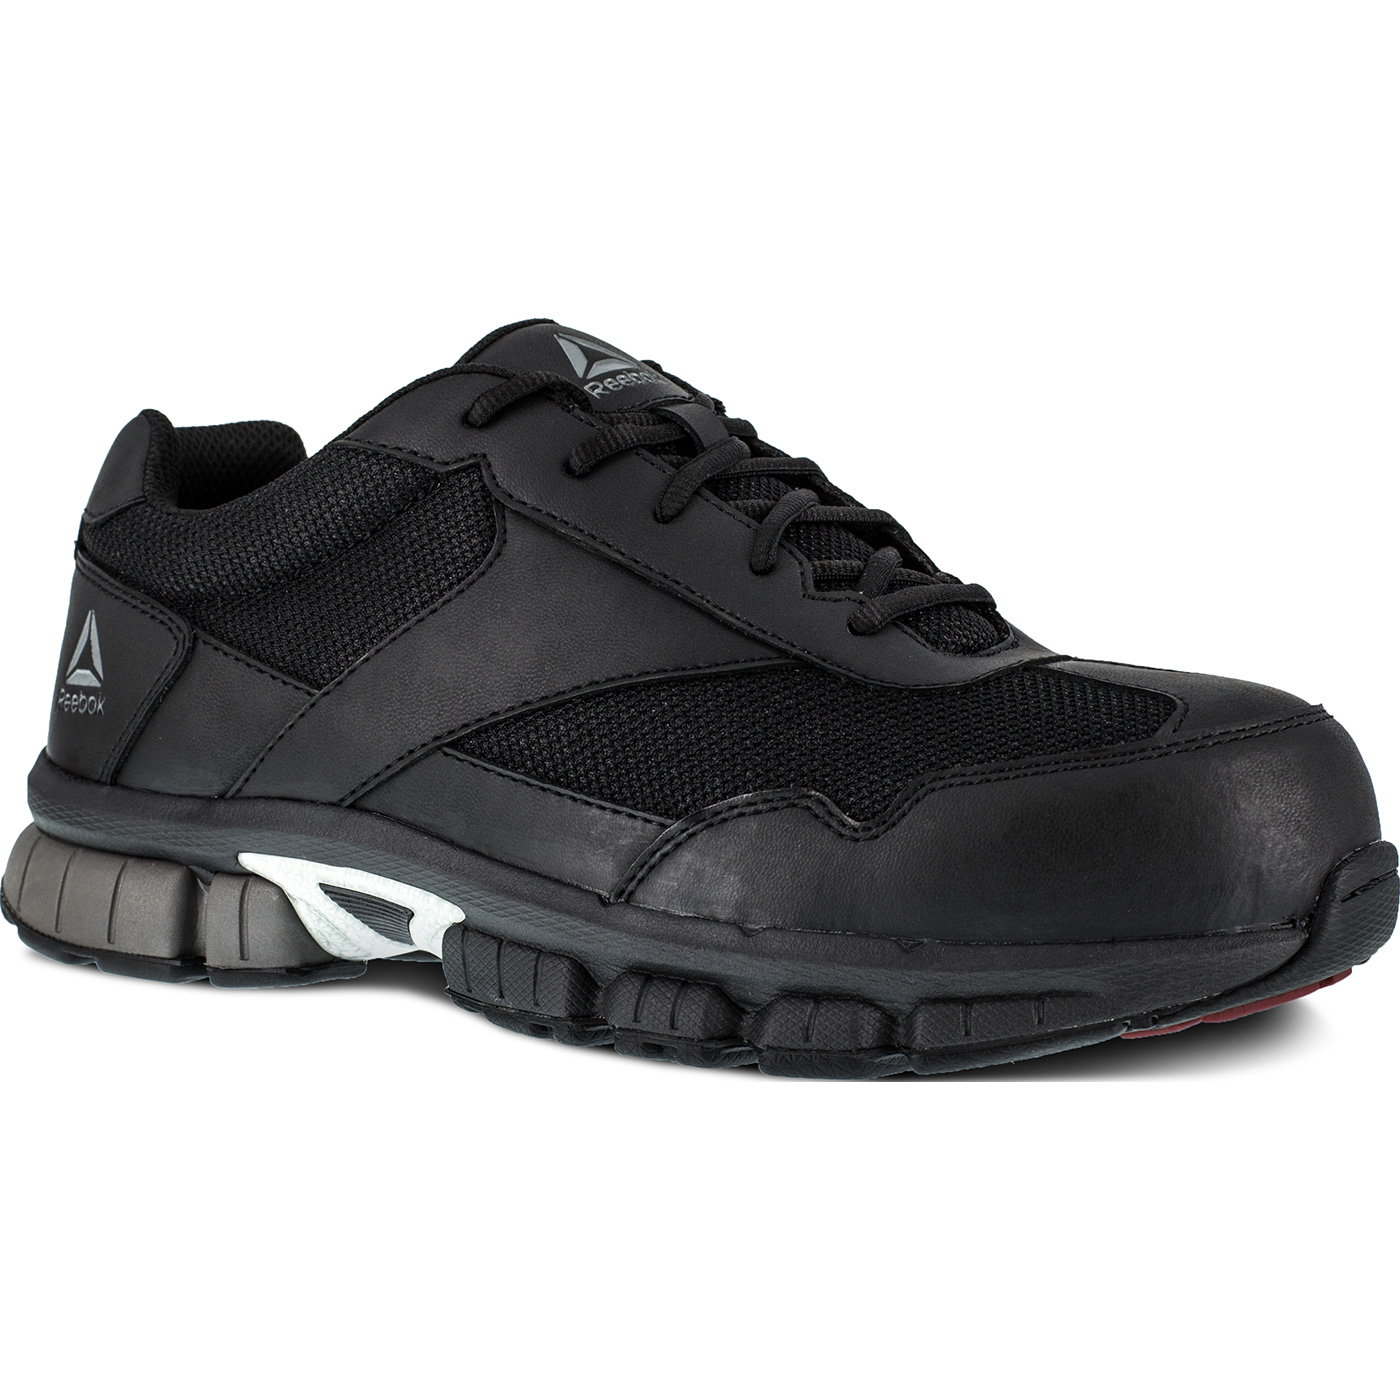 Reebok Ketia Composite Toe Work Athletic Shoe Size 11(W) - image 1 of 5